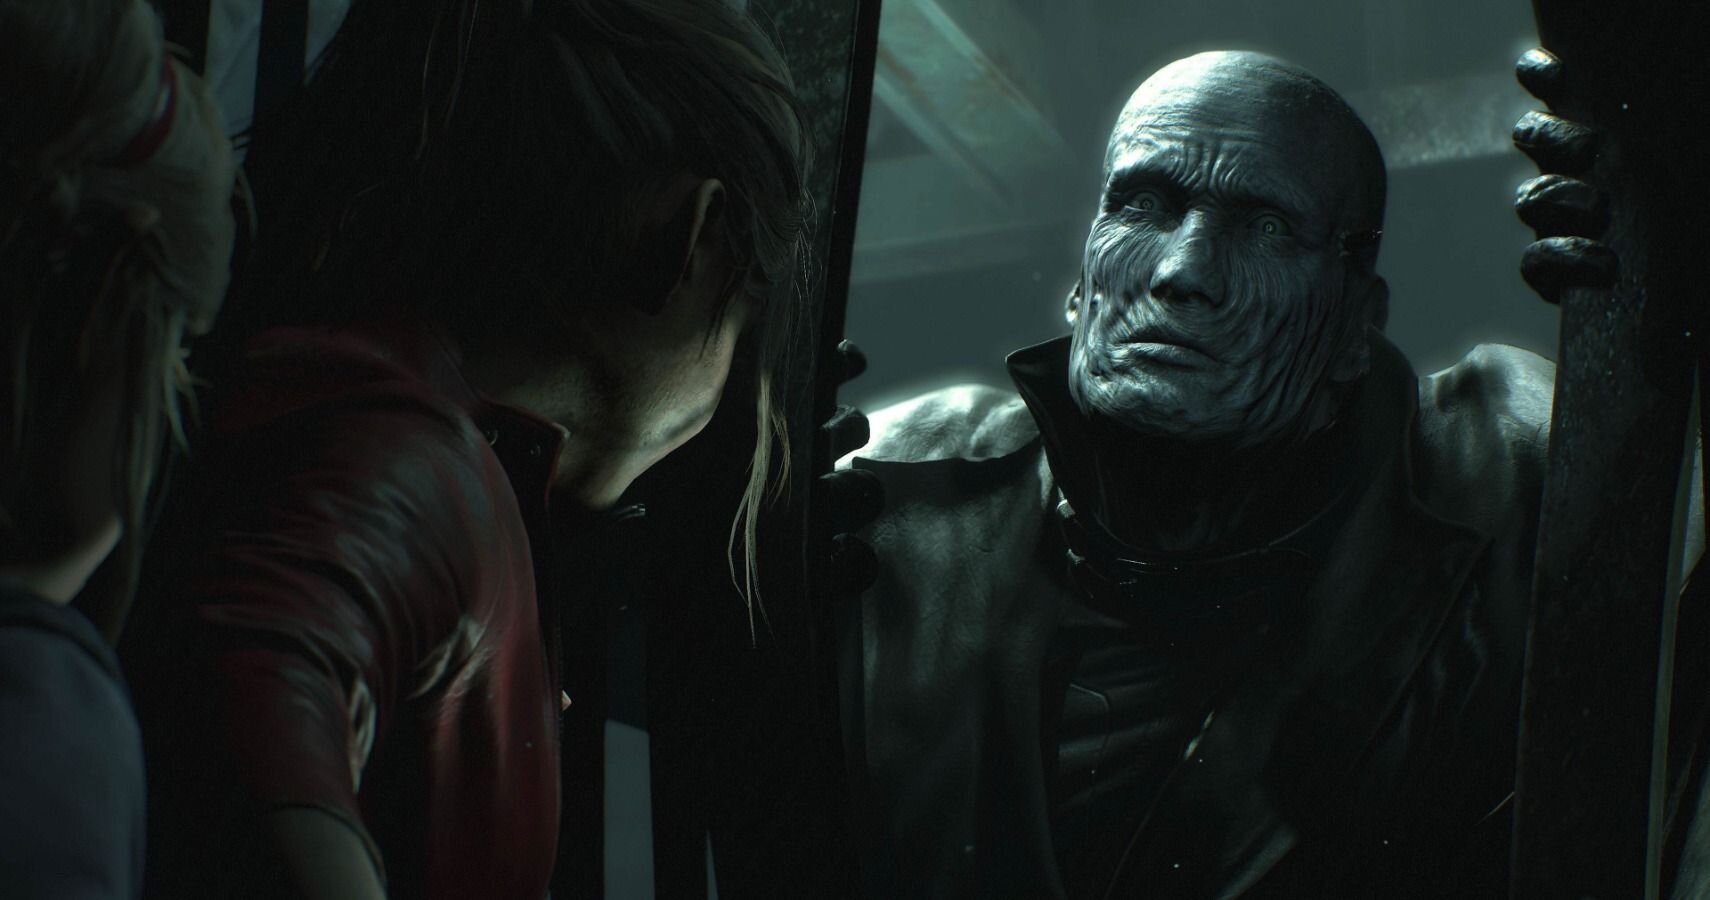 Game Critics Awards 2018 Names 'Resident Evil 2' Remake Best of Show